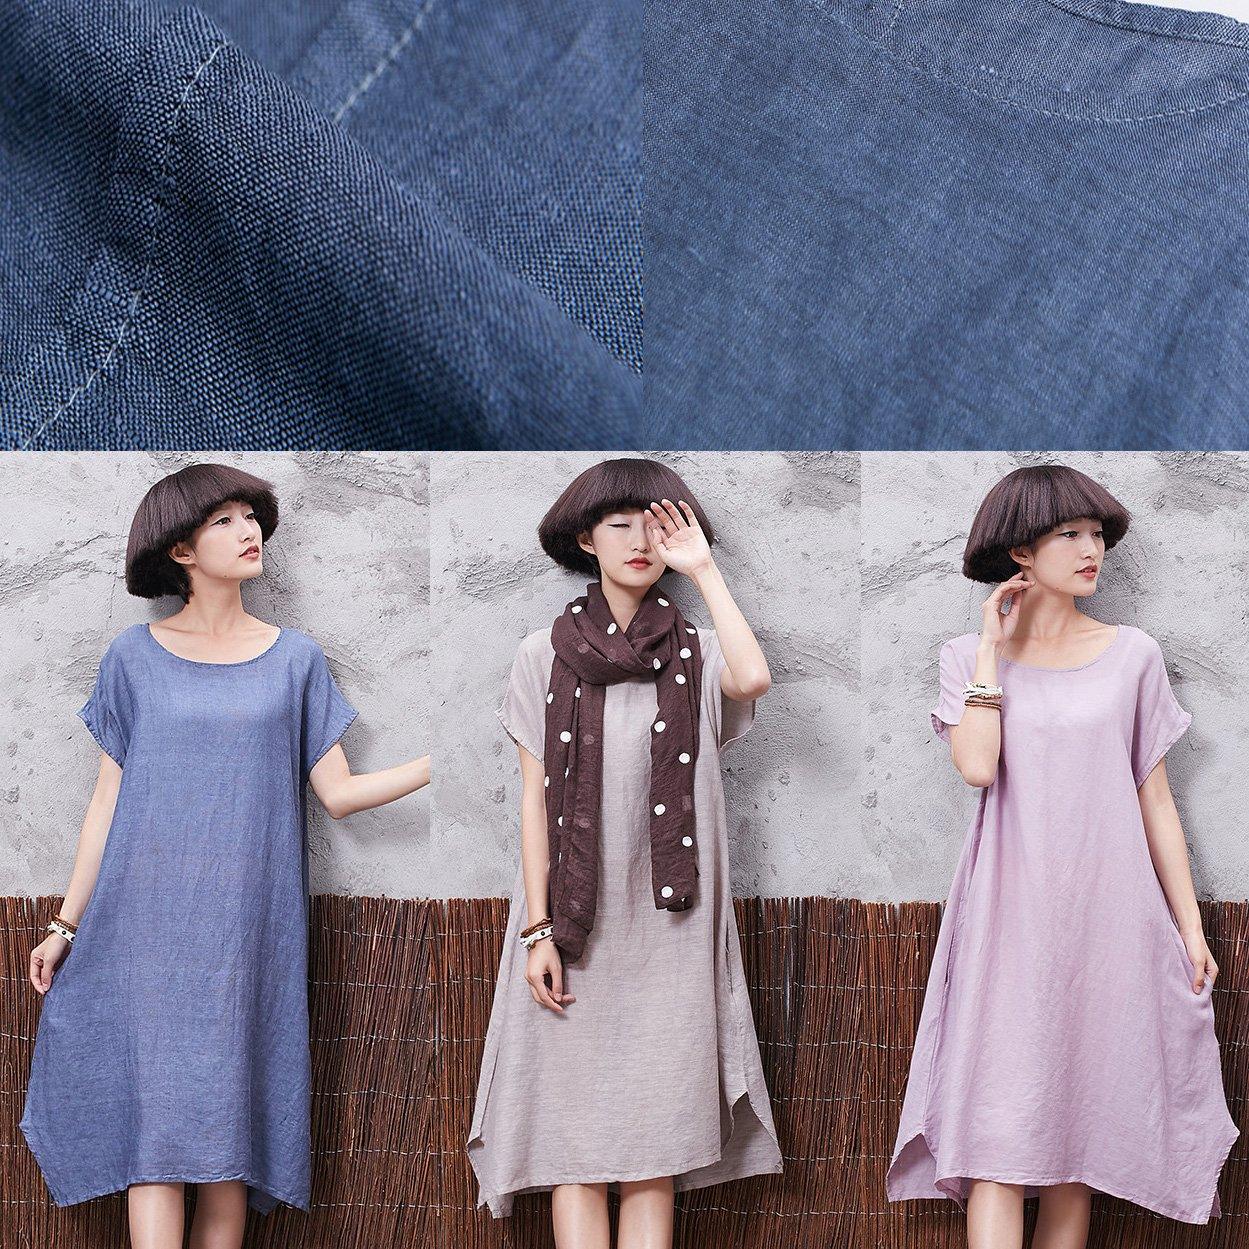 Women short sleeve linen cotton quilting clothes Tutorials pink side open Dress summer - Omychic